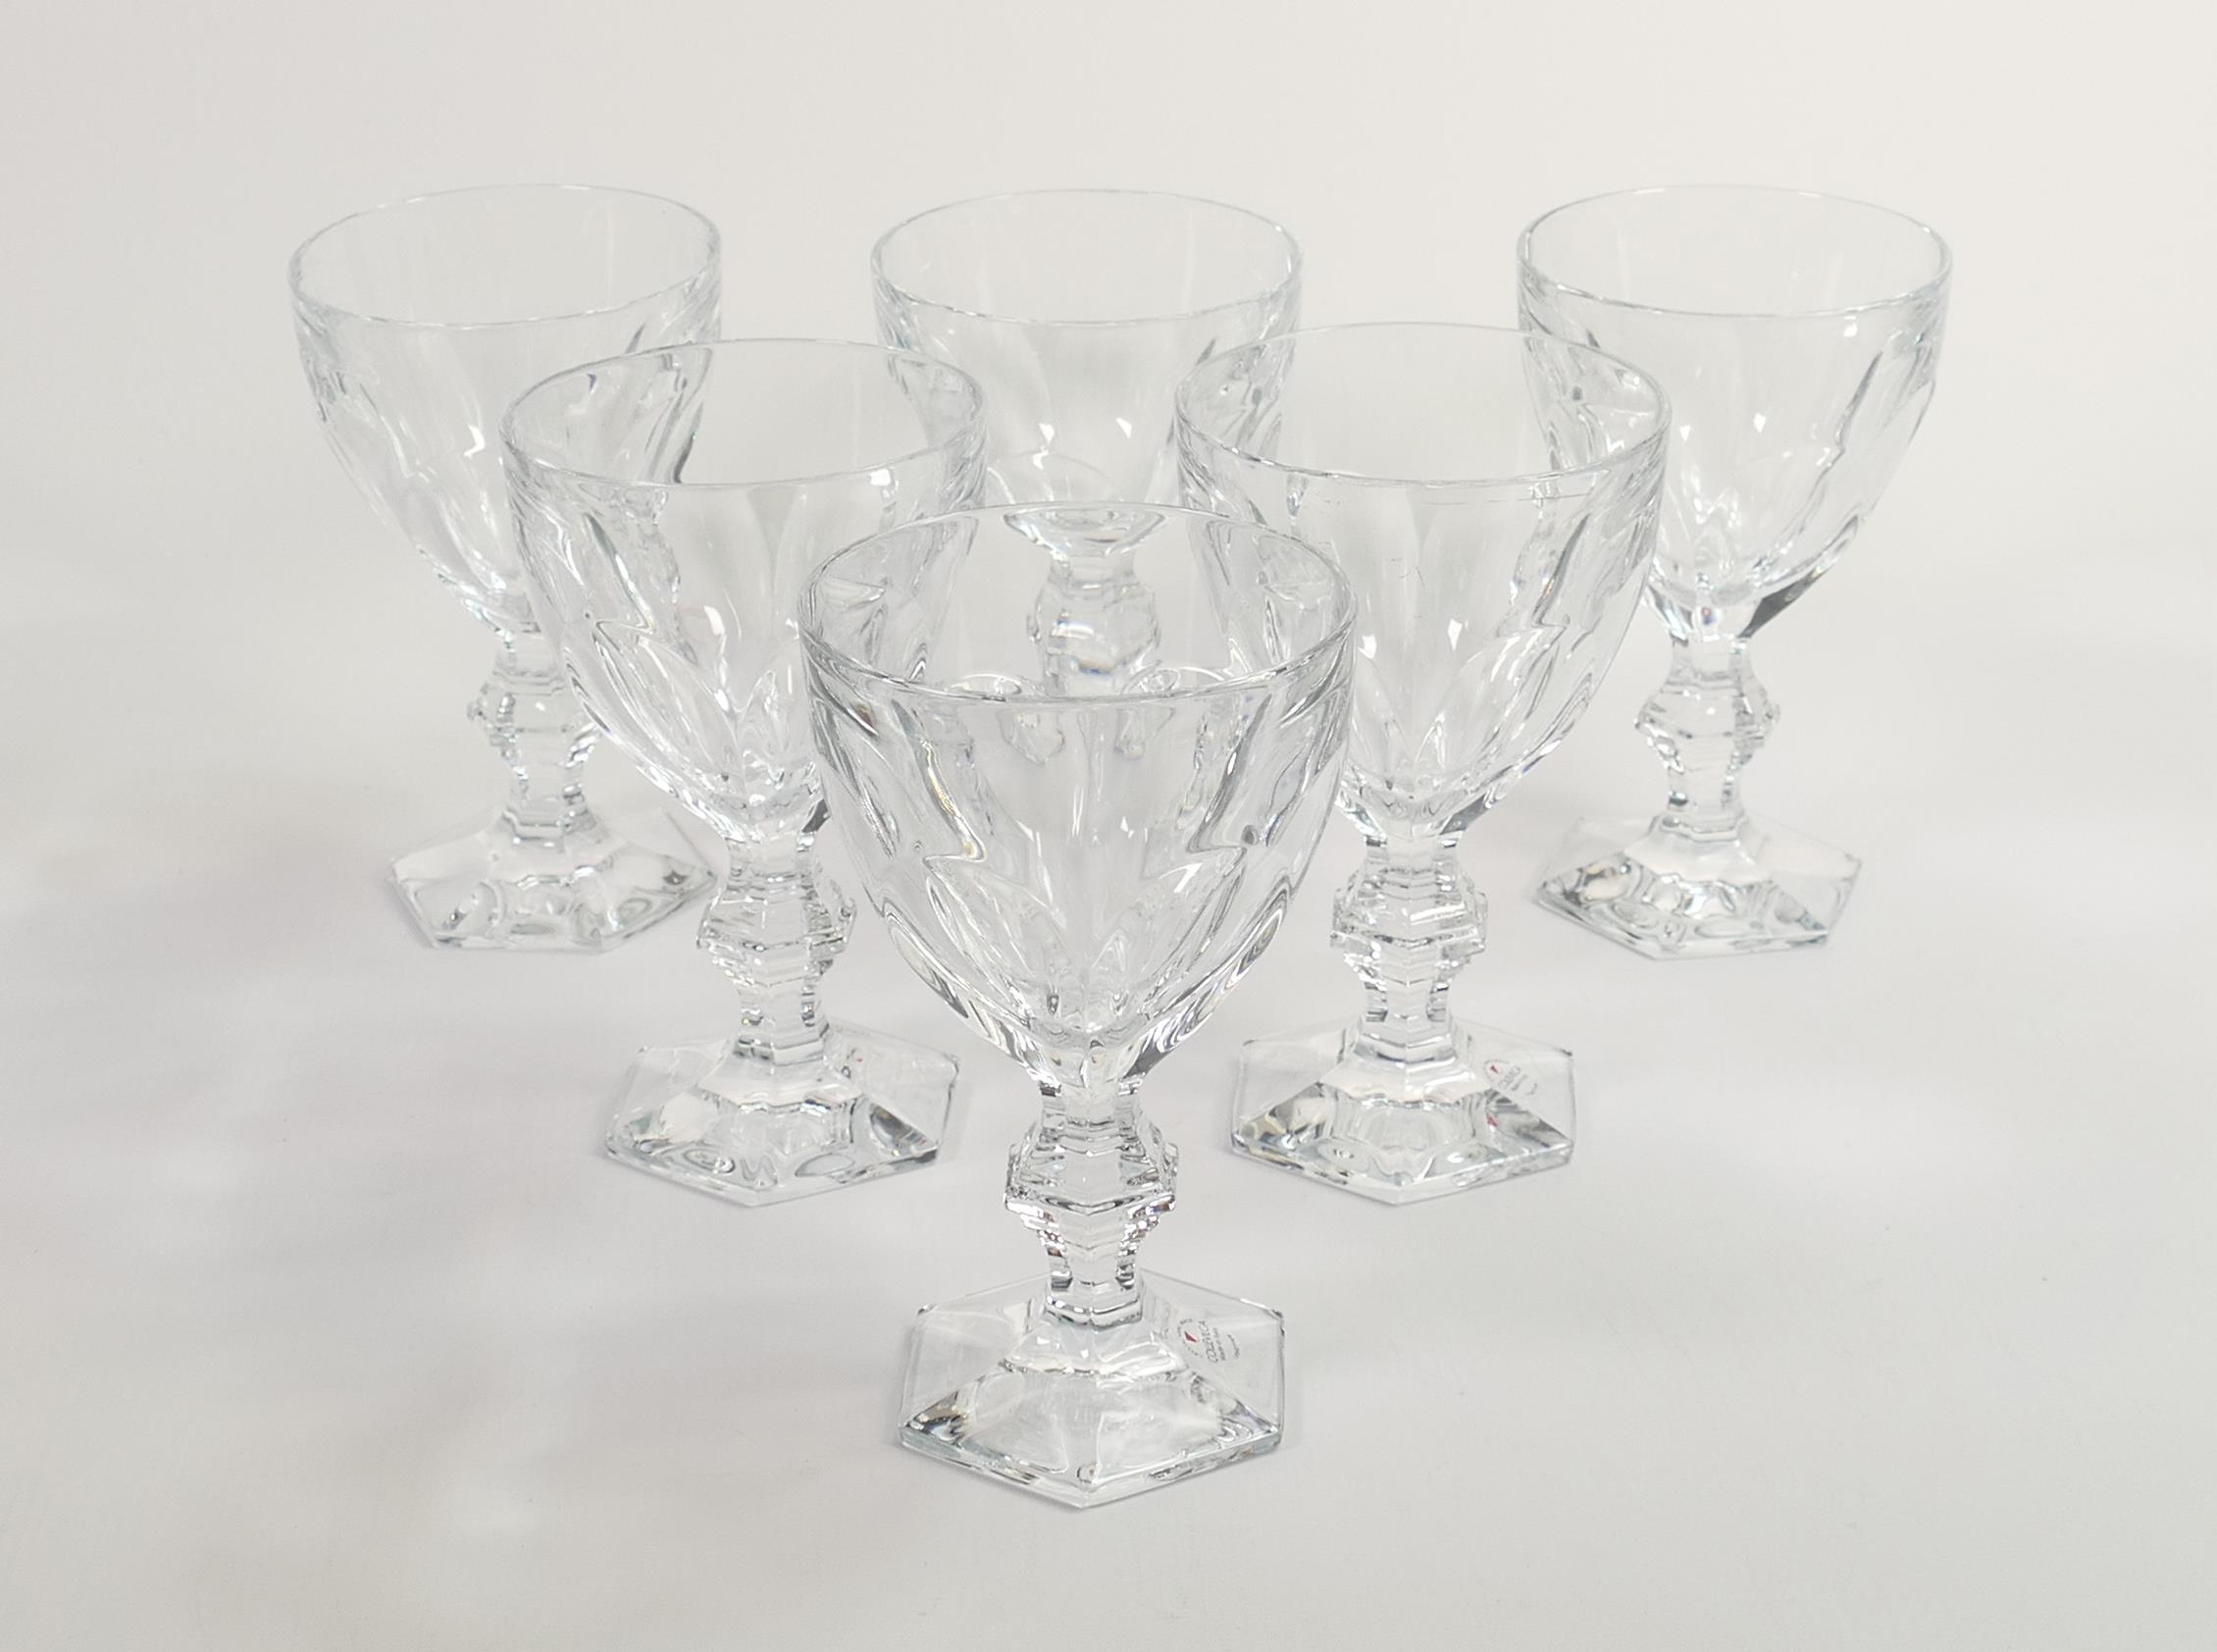 Boxed Collevilca for De Lamerie Fine Bone China un decorated glass crystal Wine Glasses, height 15.